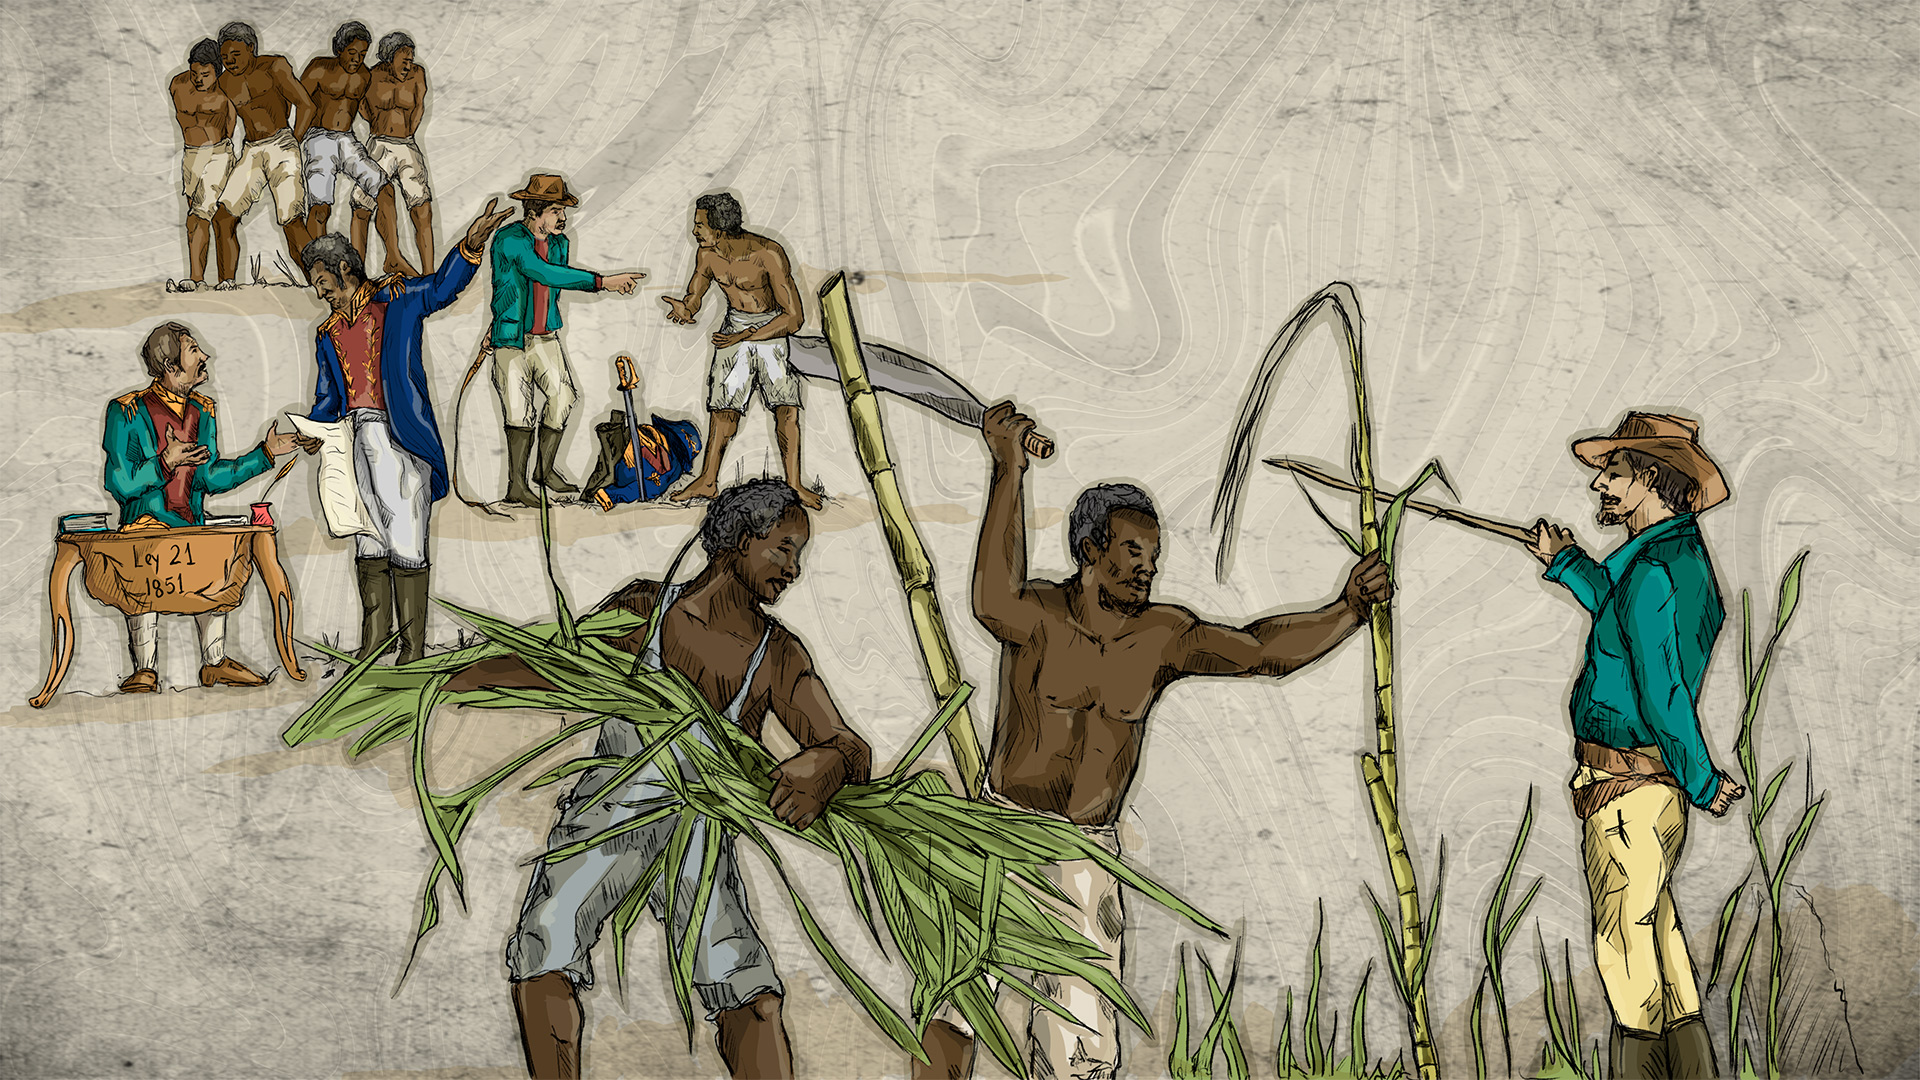 afrocolombianos esclavizados por colonos en cultivos de caña